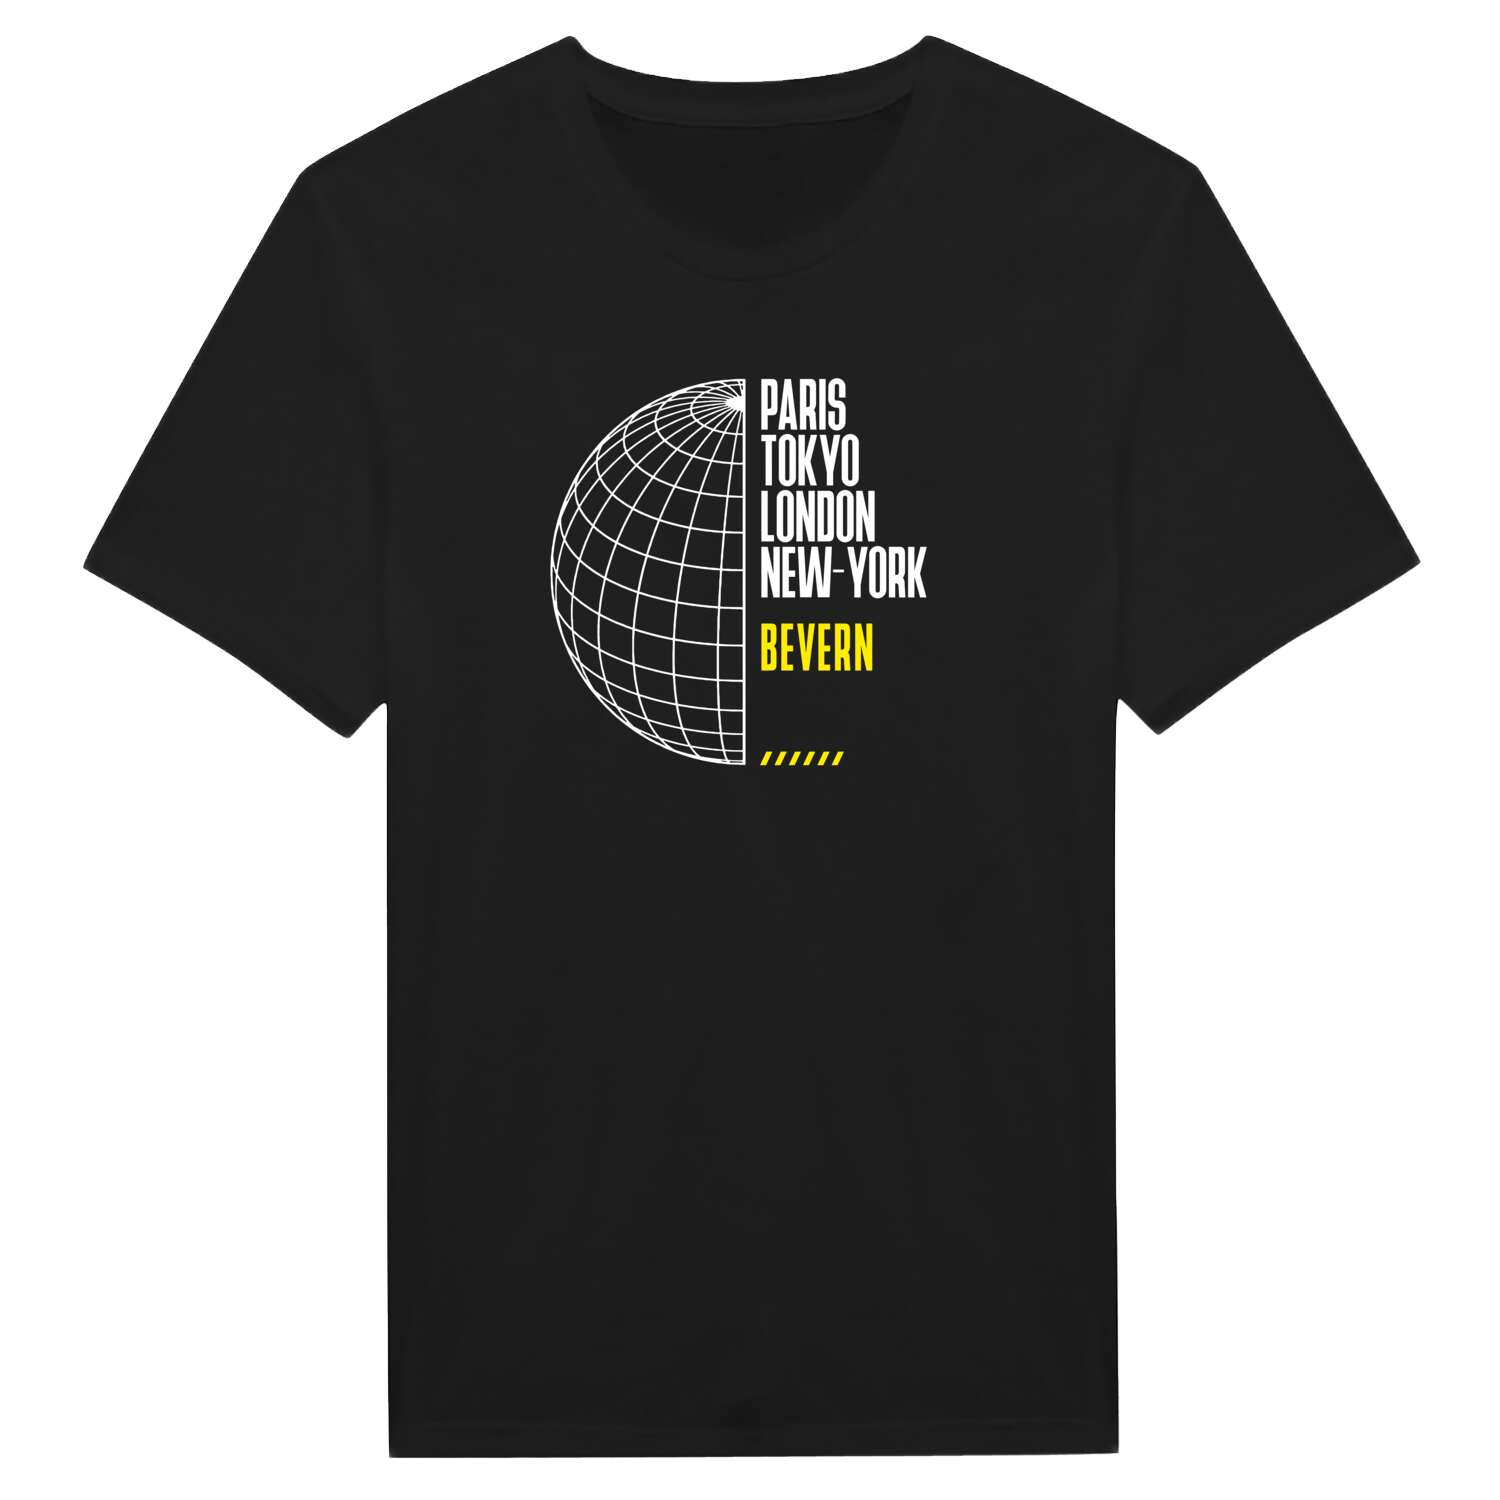 Bevern T-Shirt »Paris Tokyo London«